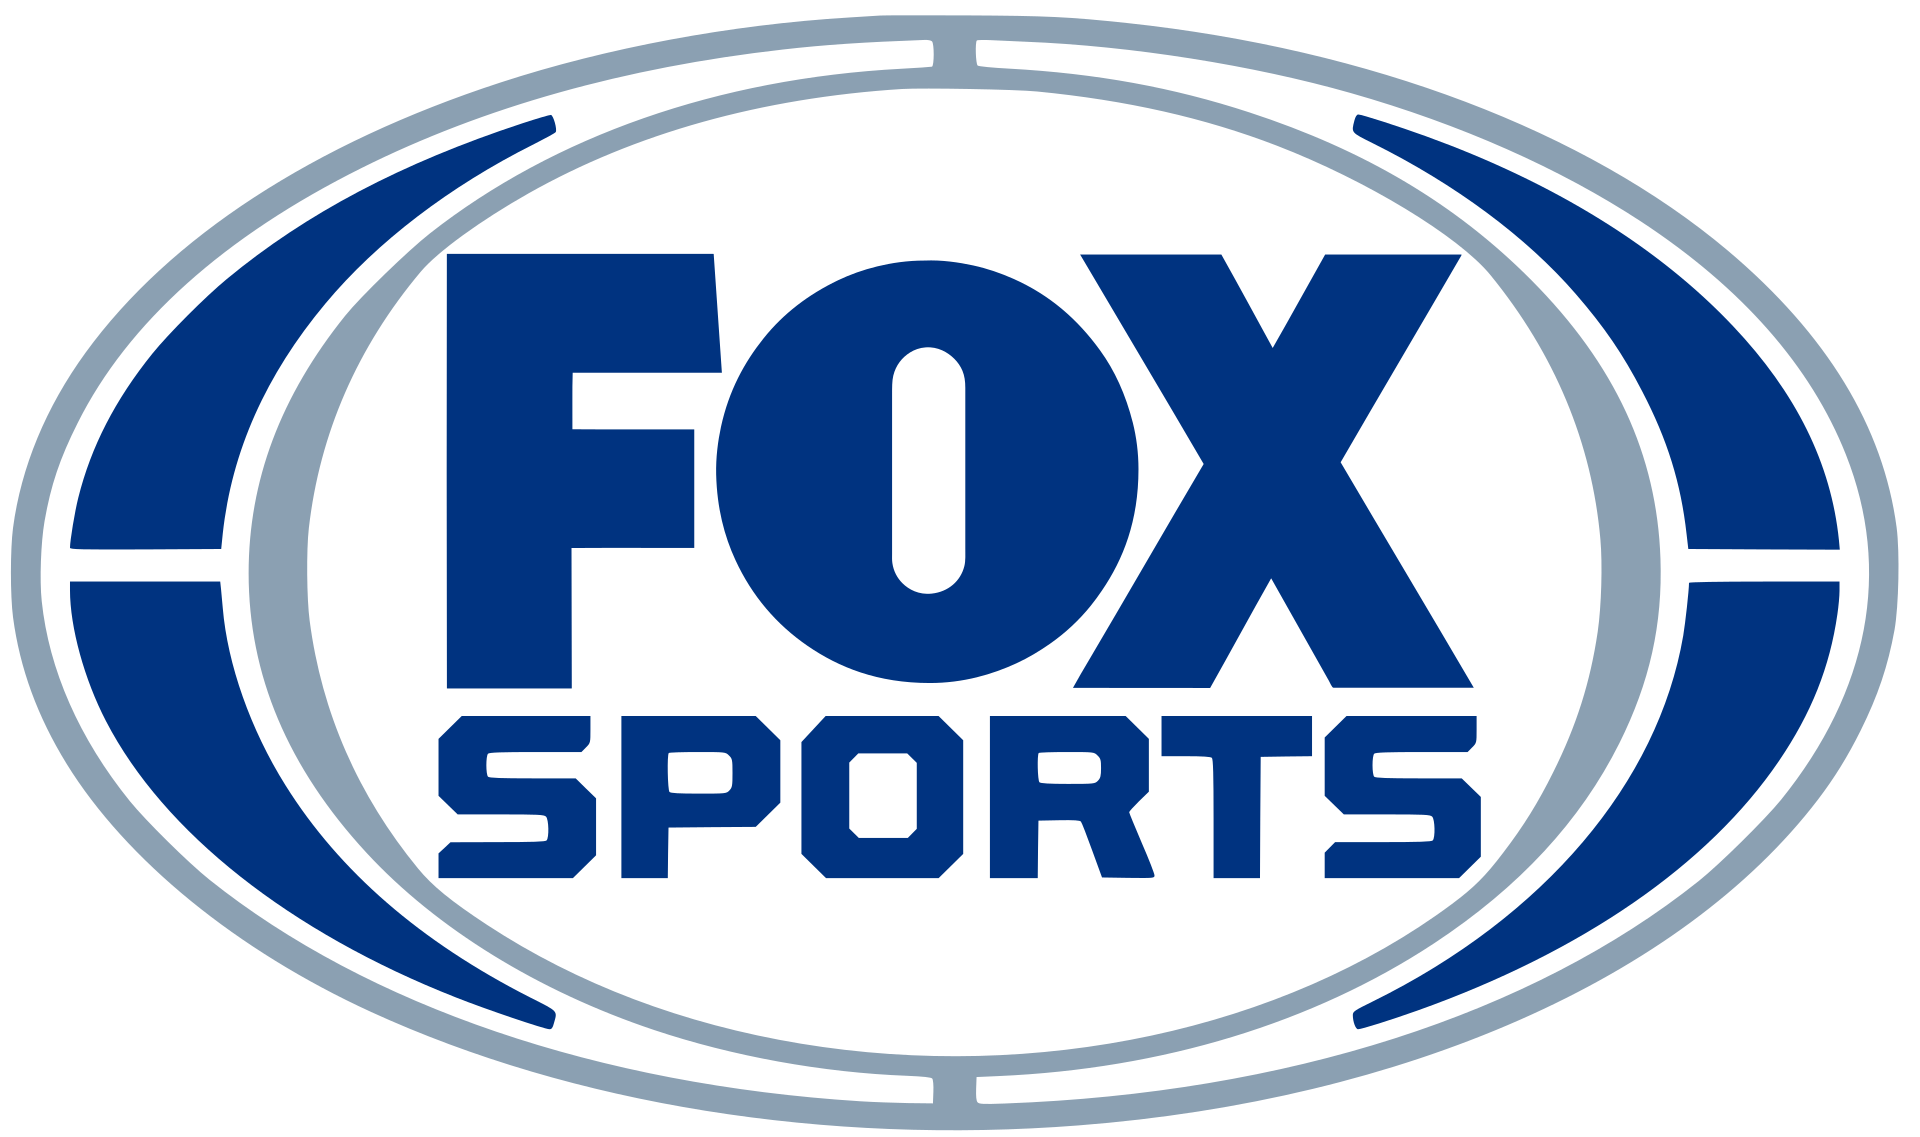 FOX_Sports_logo.svg.png